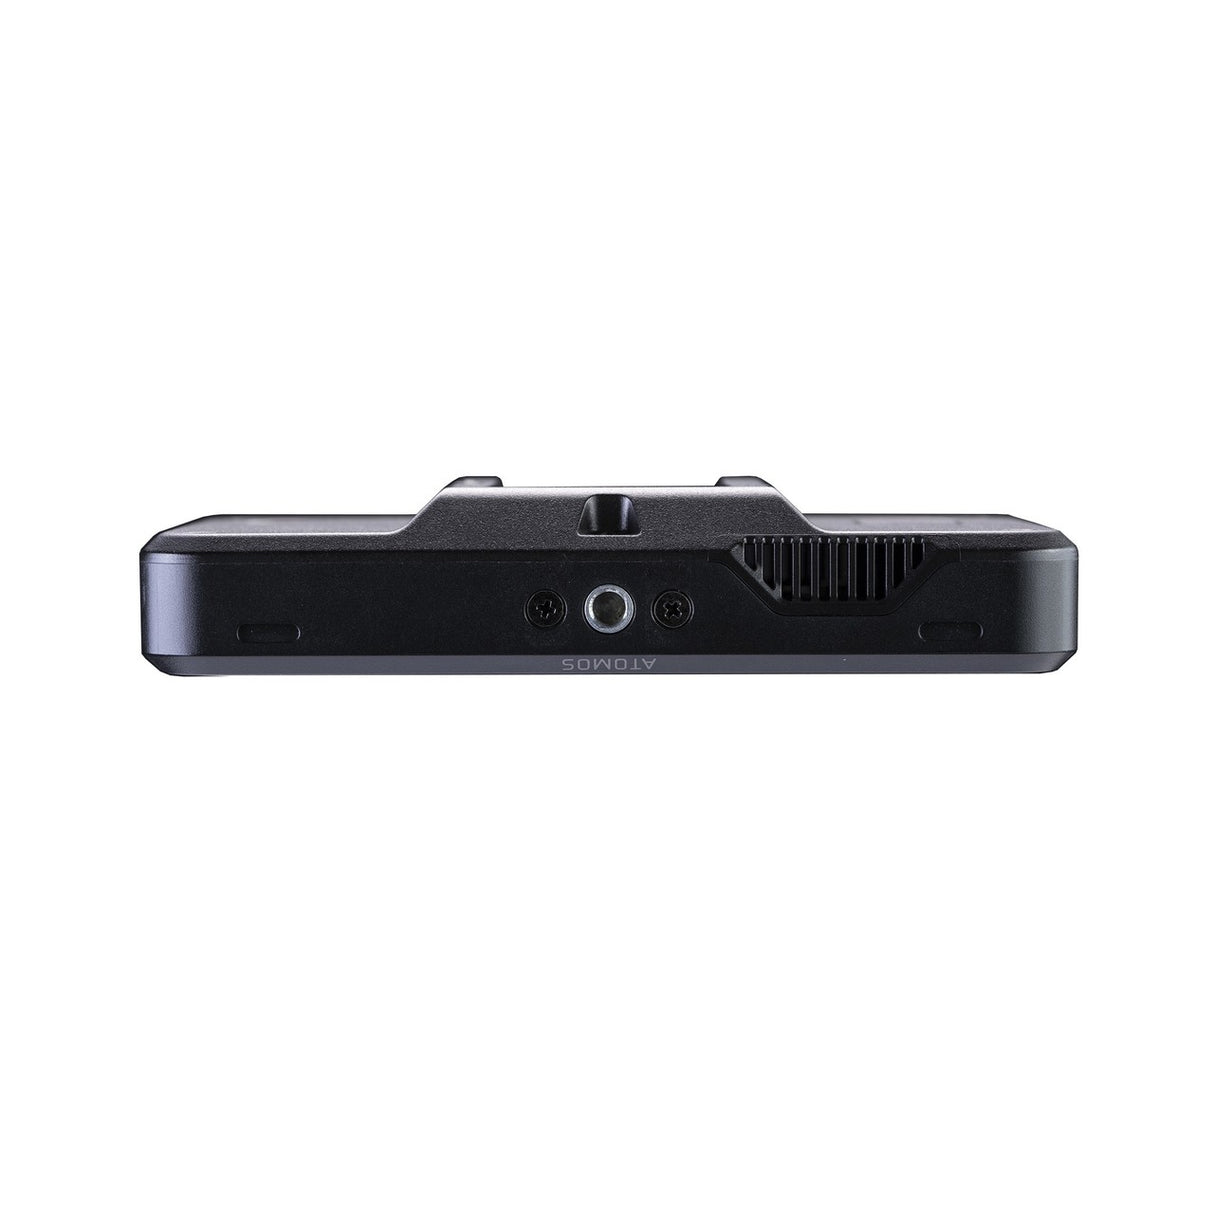 Atomos Shinobi 5-Inch HDR Photo and Video Monitor